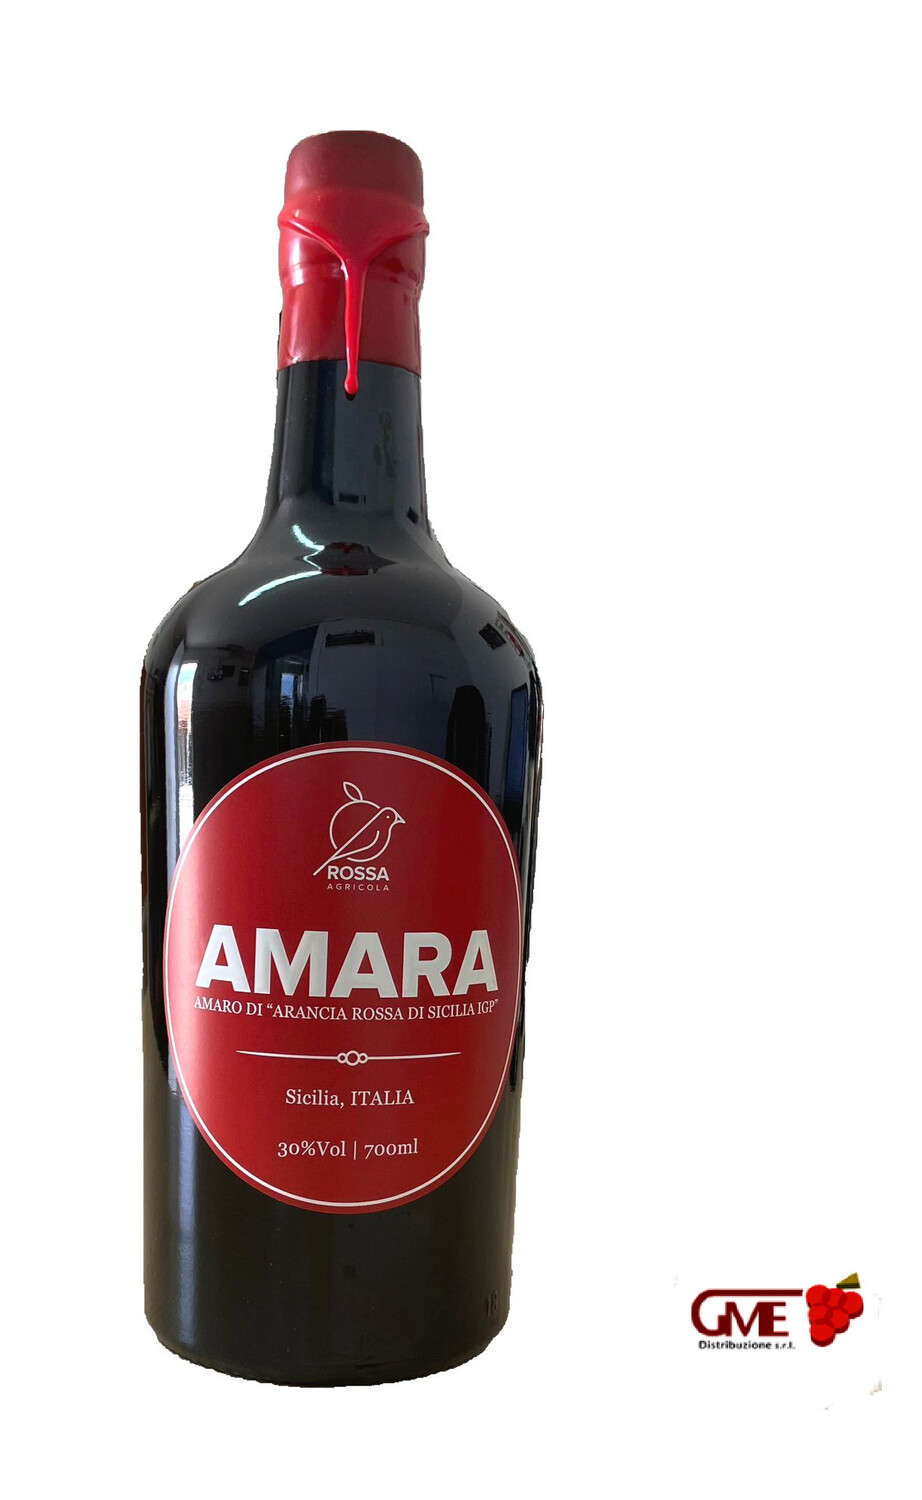 Amaro d'Arancia Rossa di Sicilia "Amara" Cl.70 30°